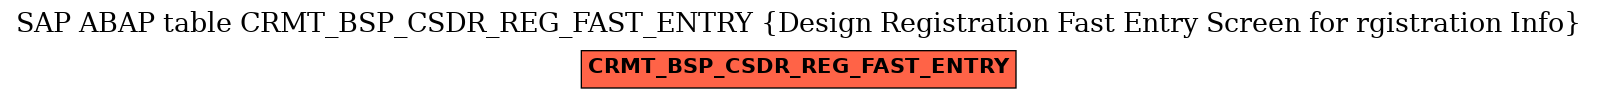 E-R Diagram for table CRMT_BSP_CSDR_REG_FAST_ENTRY (Design Registration Fast Entry Screen for rgistration Info)